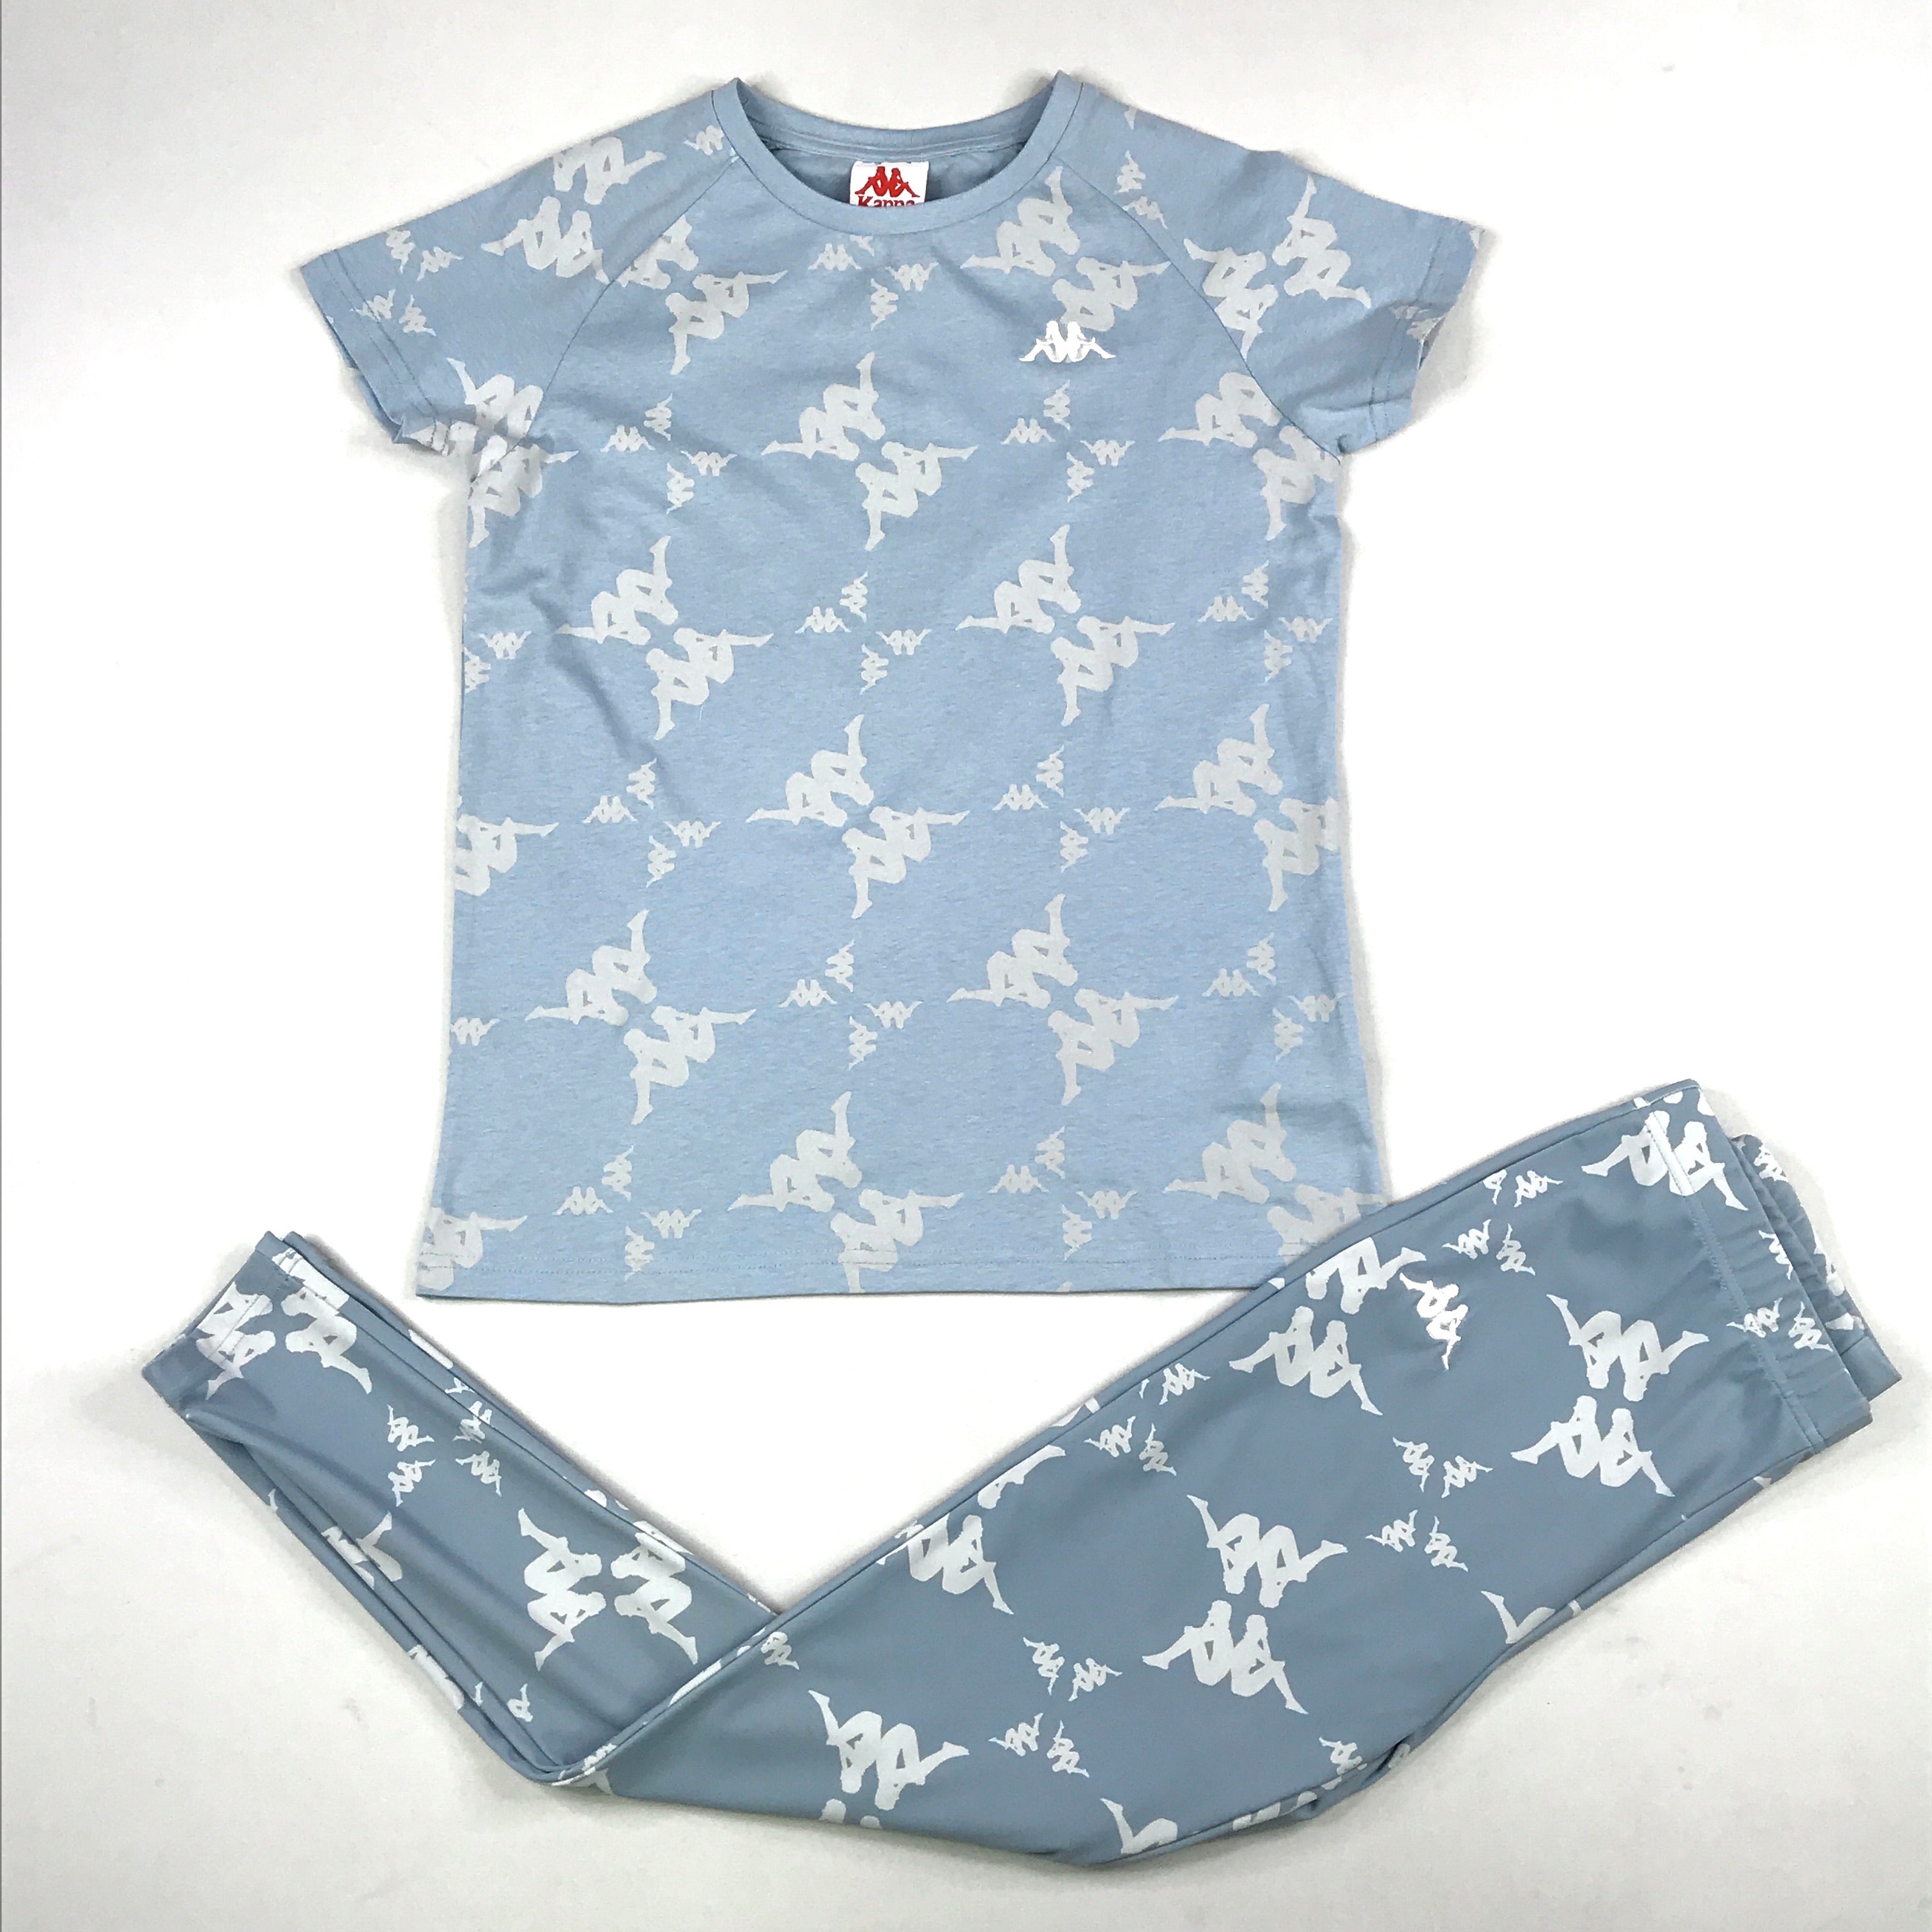 Kappa Kapan tee + leggings set in baby blue-white